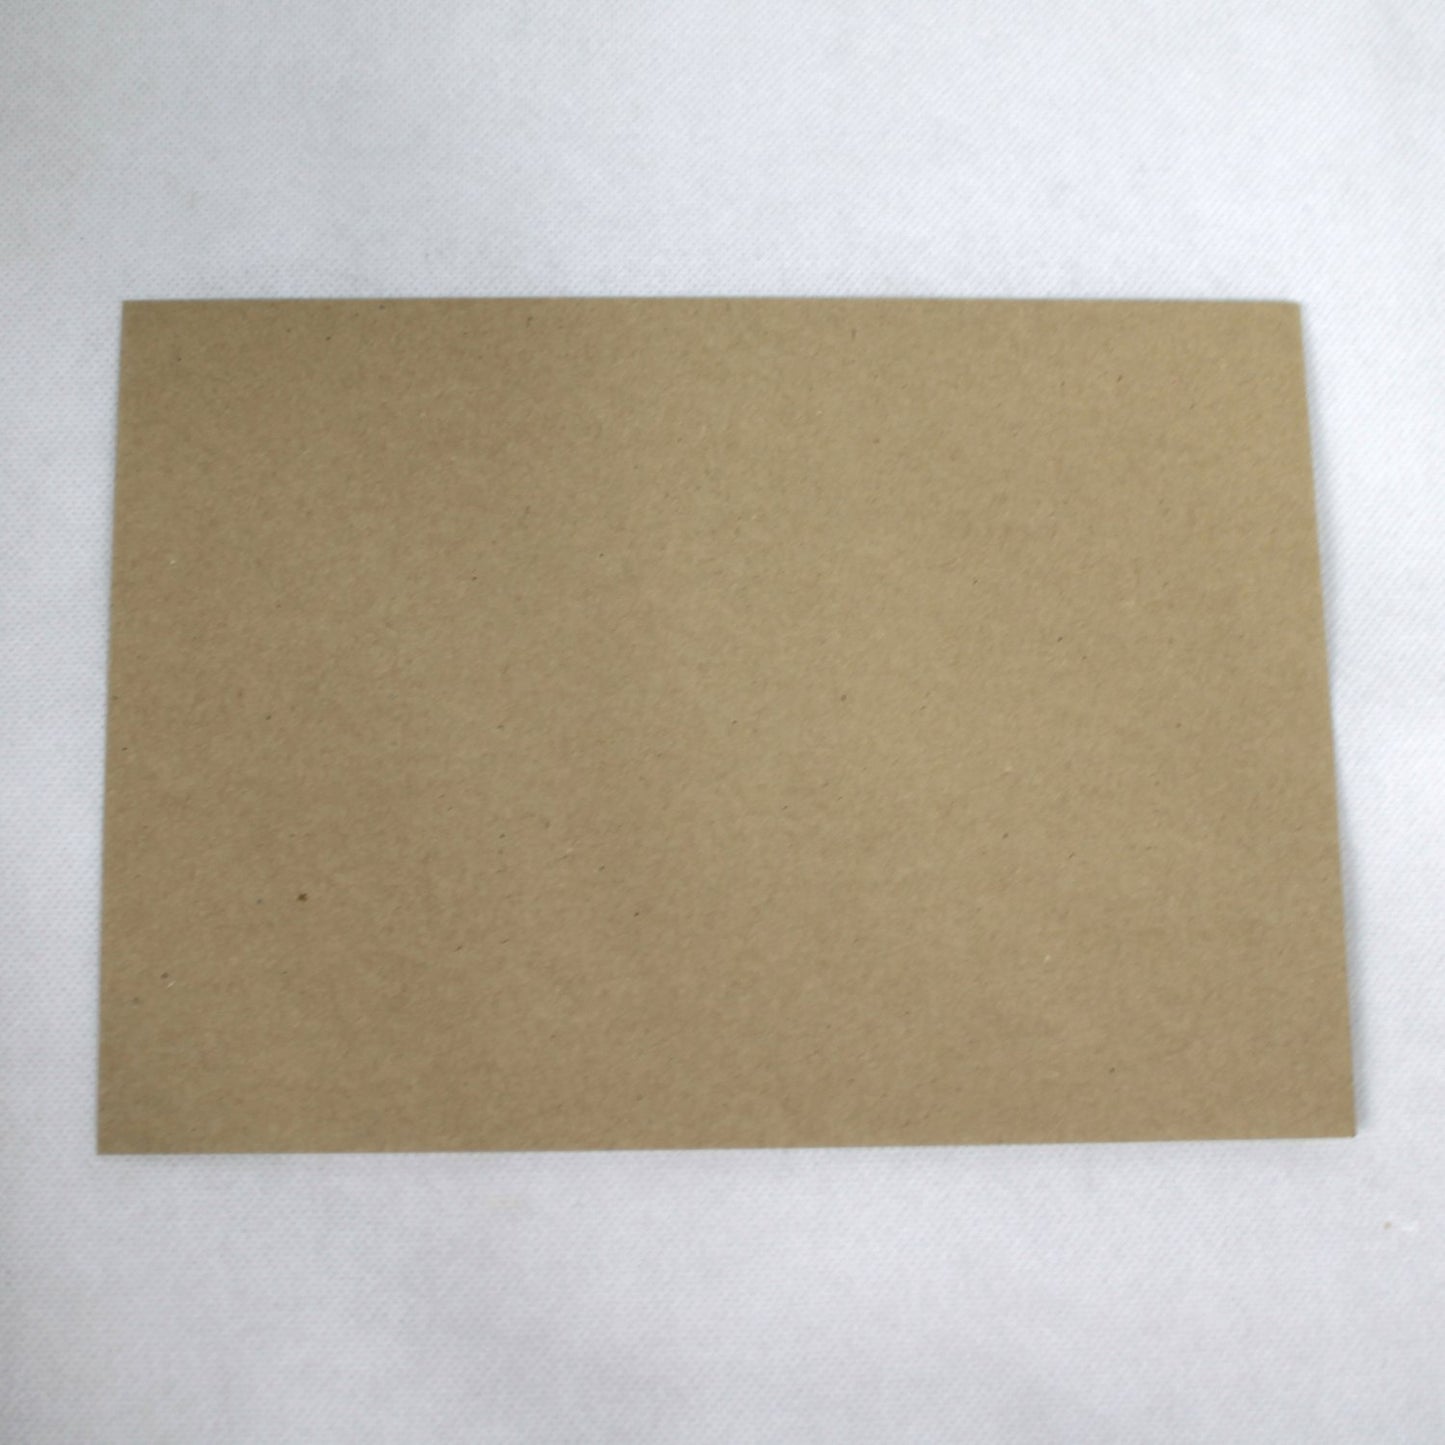 162x229mm C5 Manilla Gummed Envelopes (None Window)